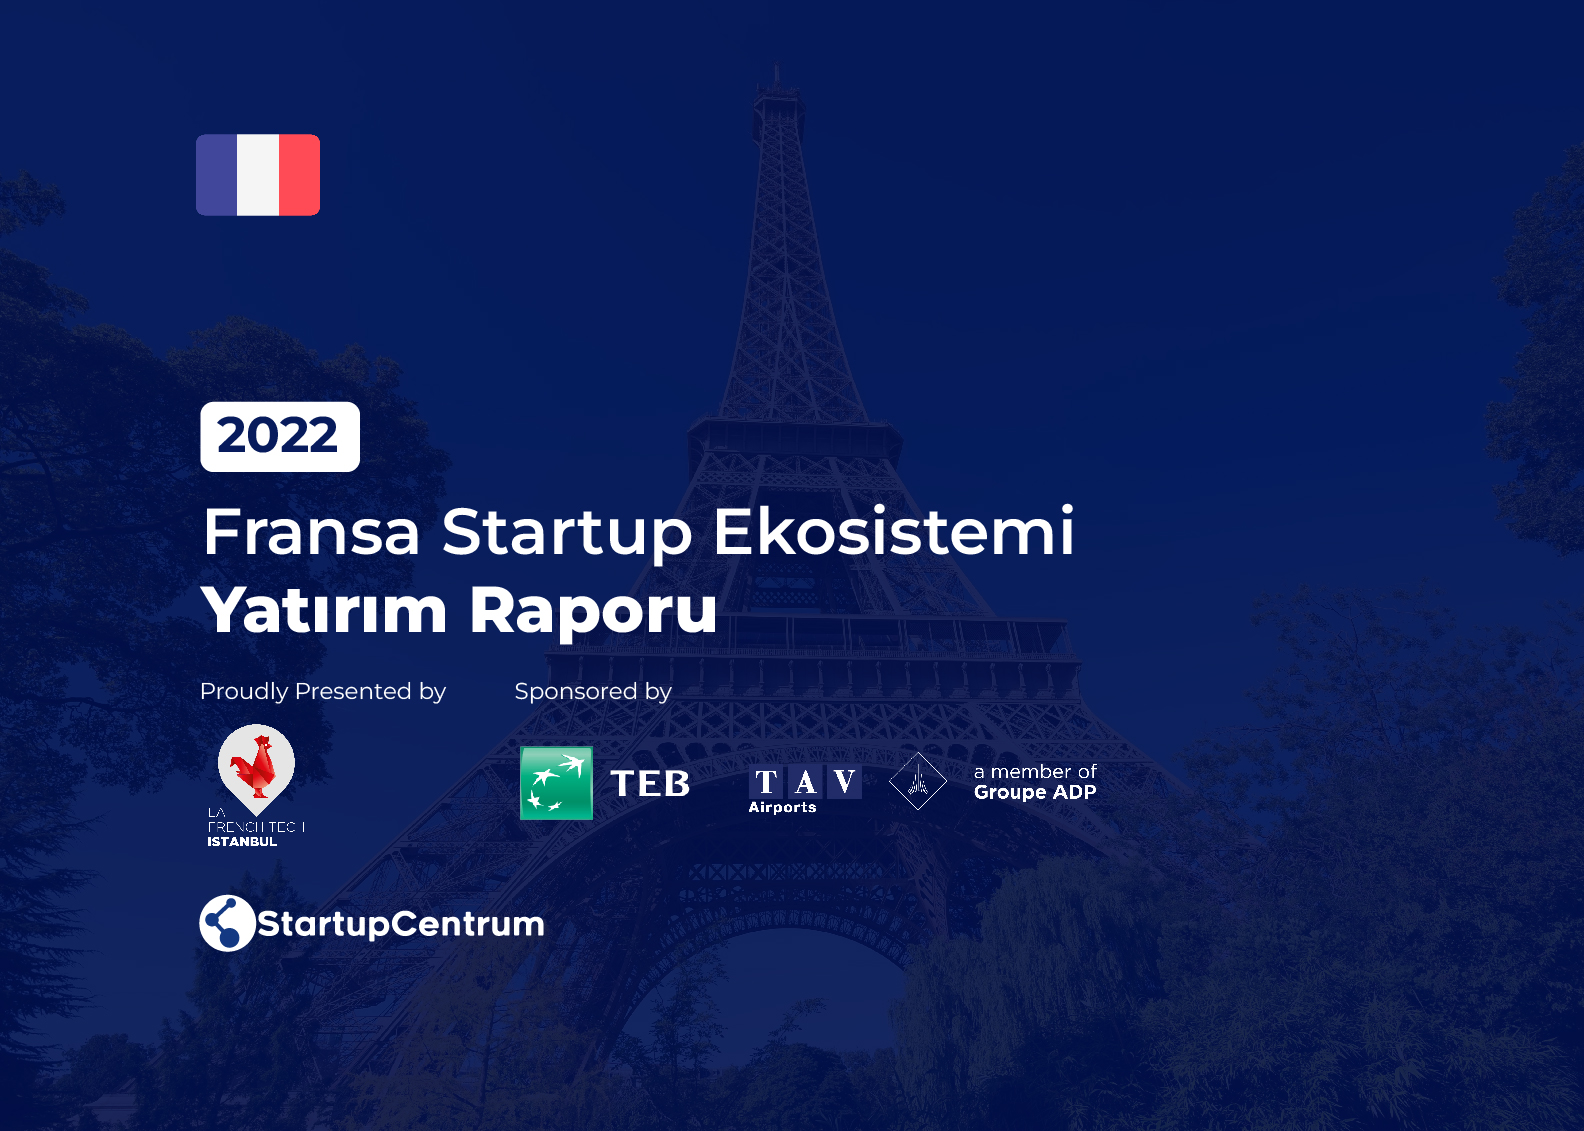 2022 Fransa Startup Ekosistemi Yatırım Raporu Cover Image